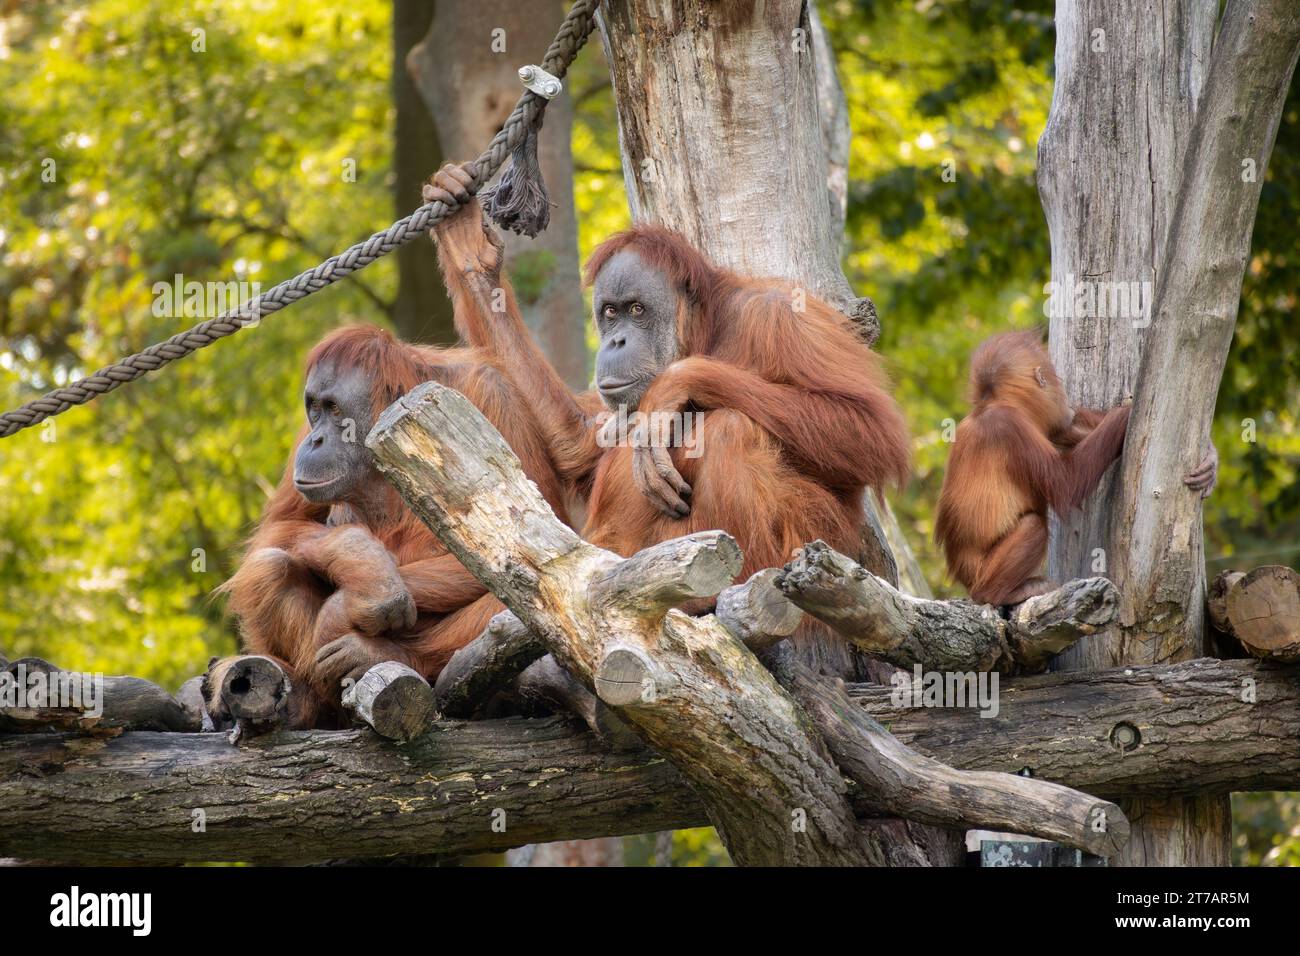 Sumatran Orangutan in Zoological Garden in Leipzig. Pongo Abelii is a Critically Endangered Primate. Wild Animals in Zoo. Stock Photo